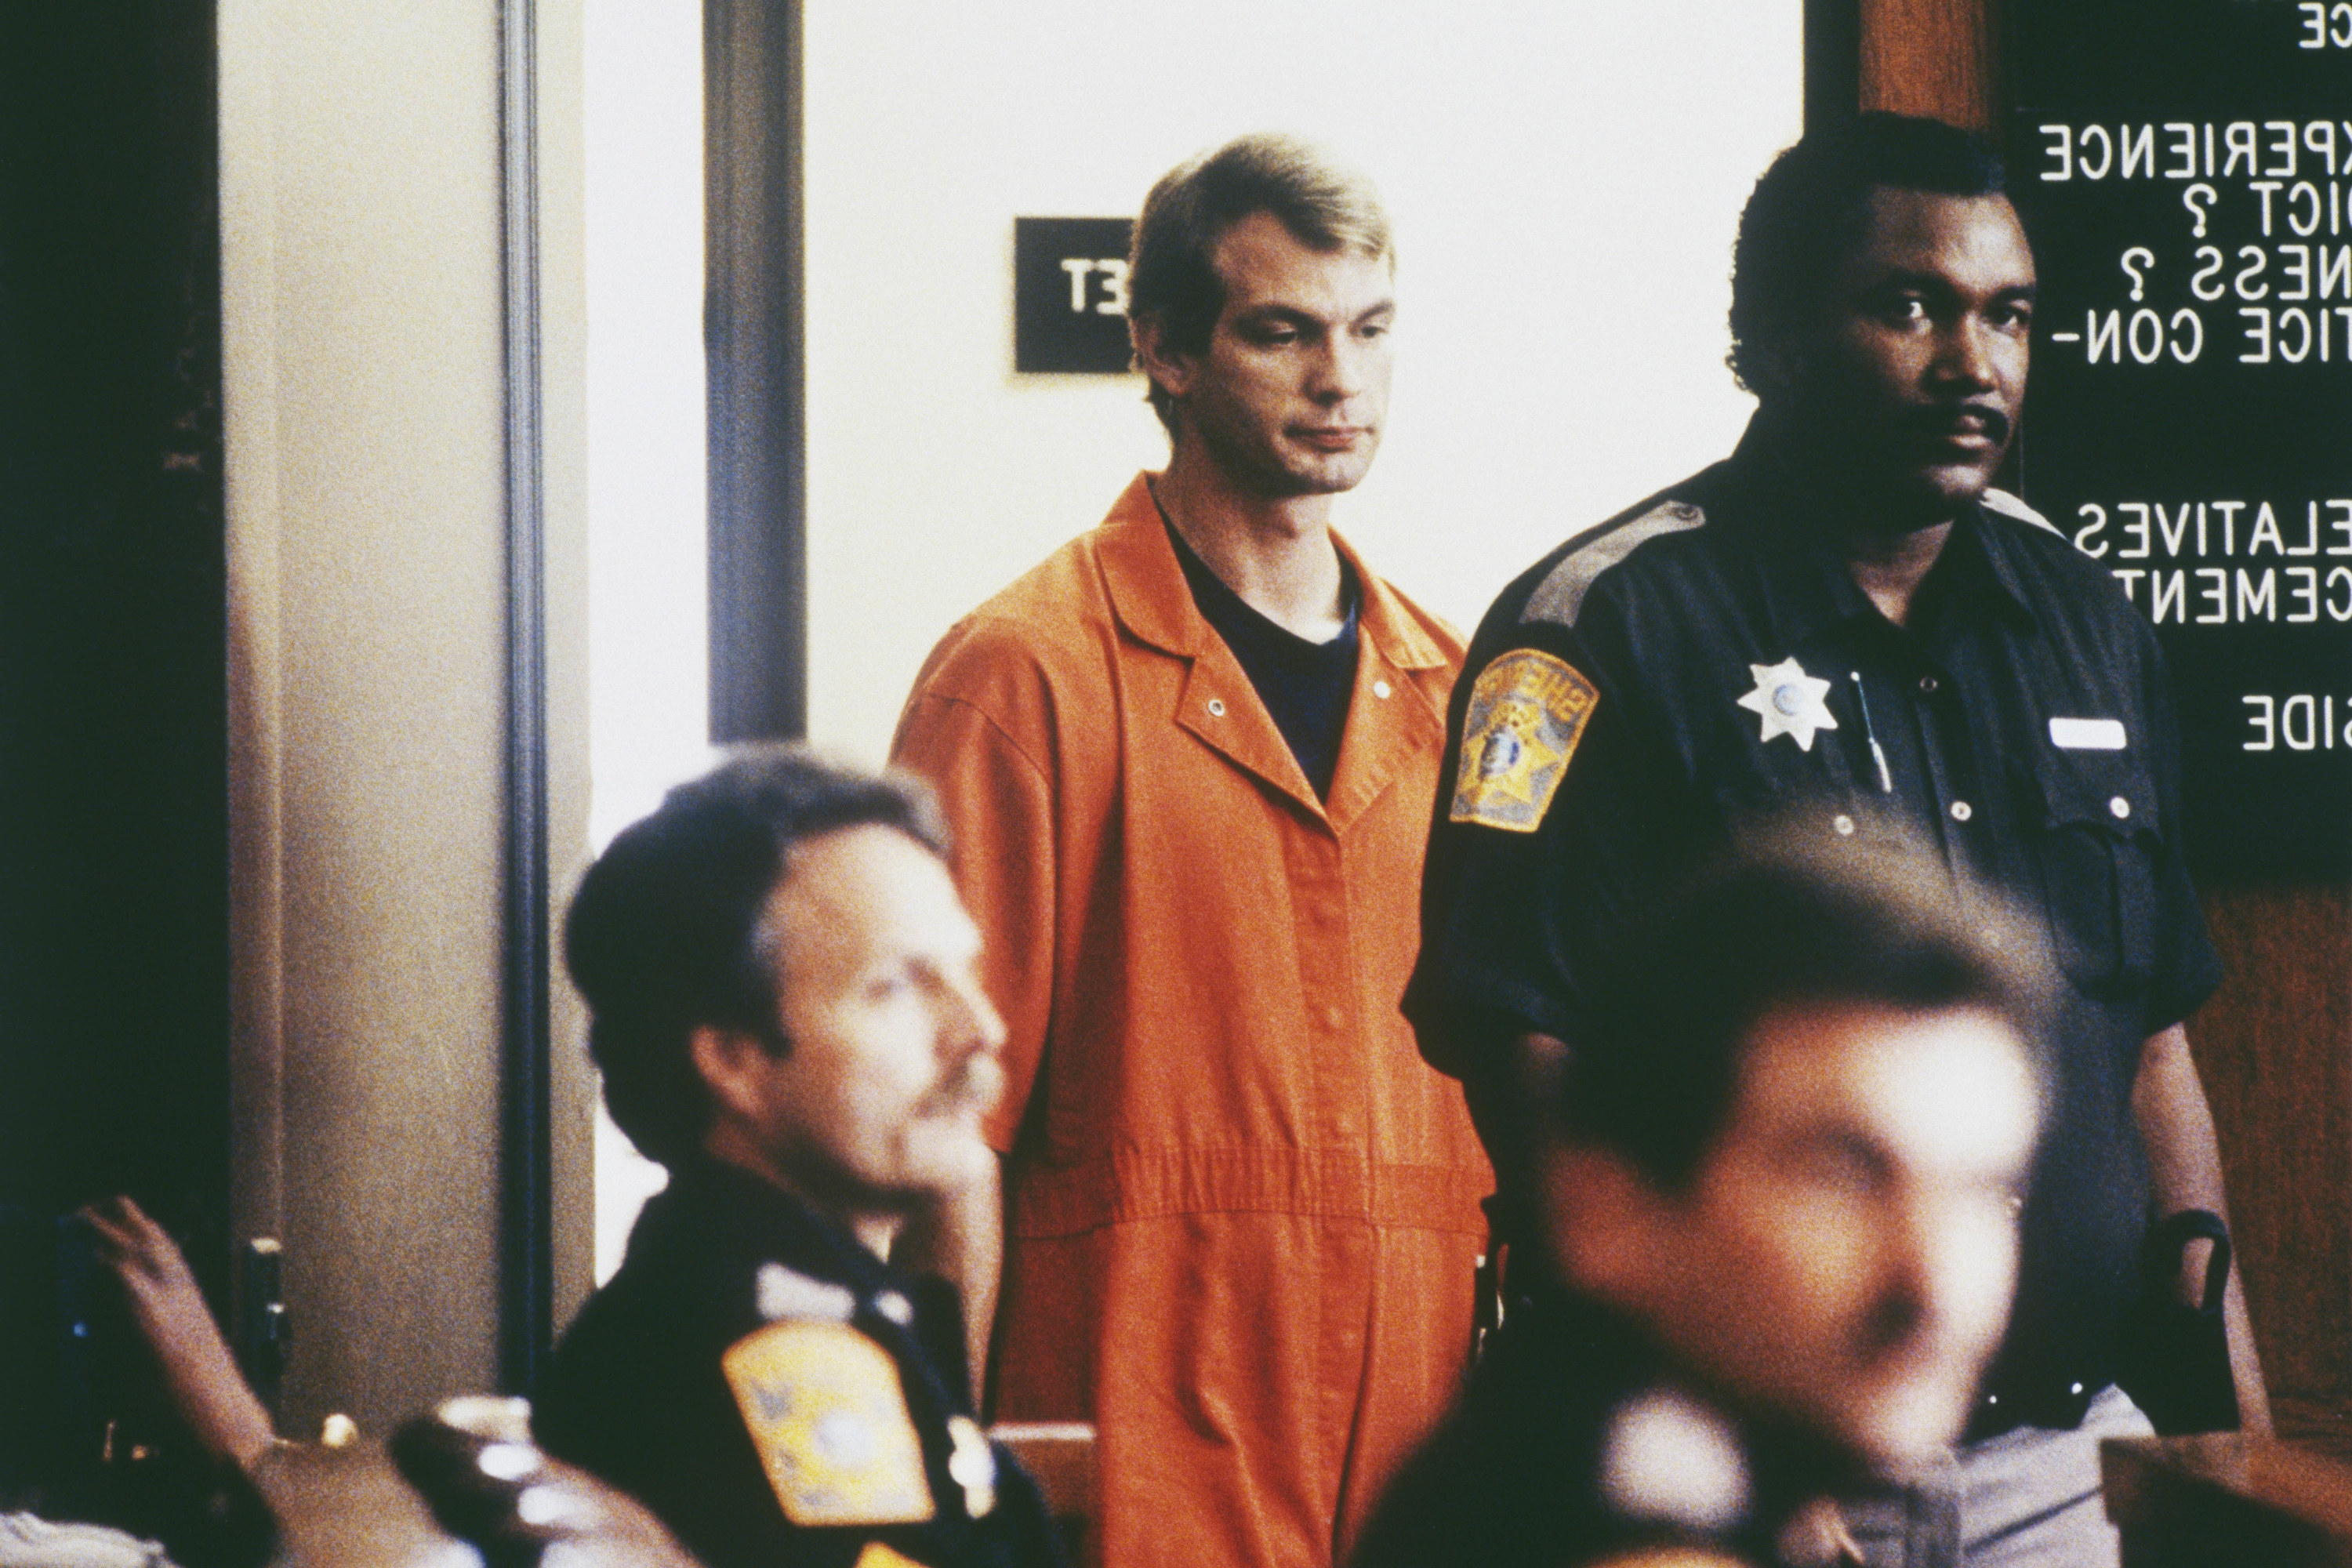 Dahmer in prison overalls alongside police officers